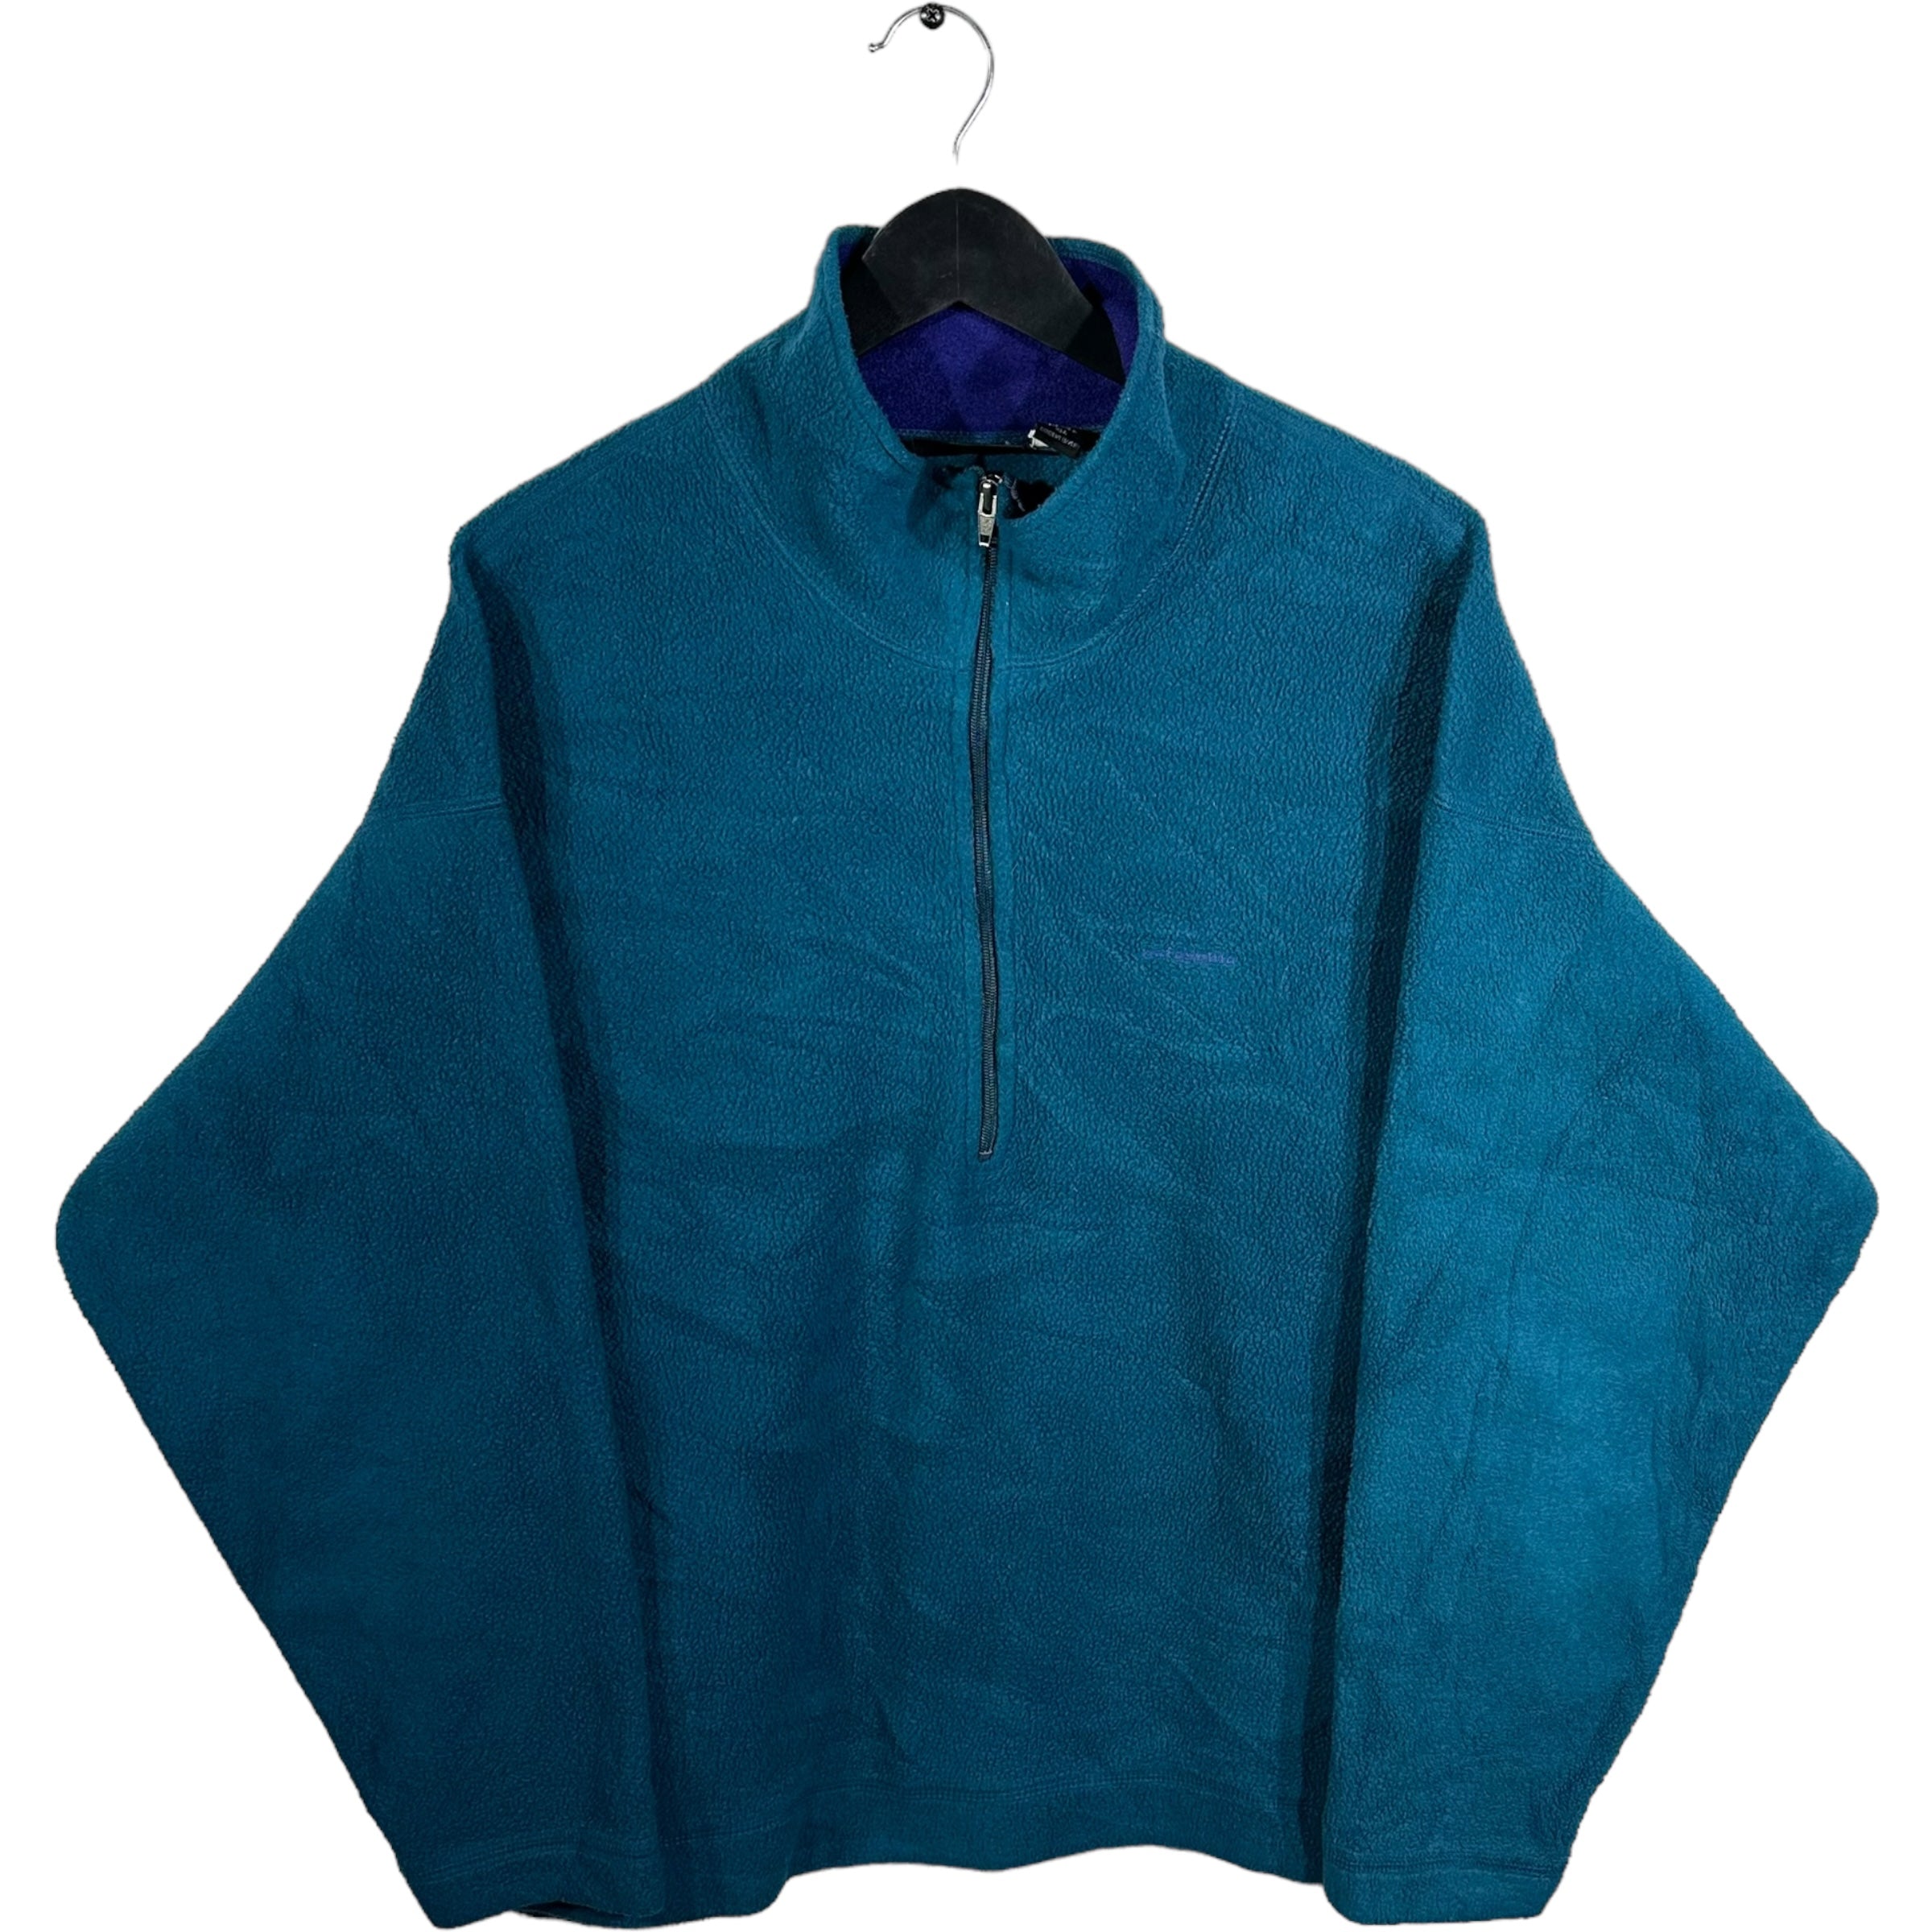 Vintage Patagonia 1/4 Zip Fleece